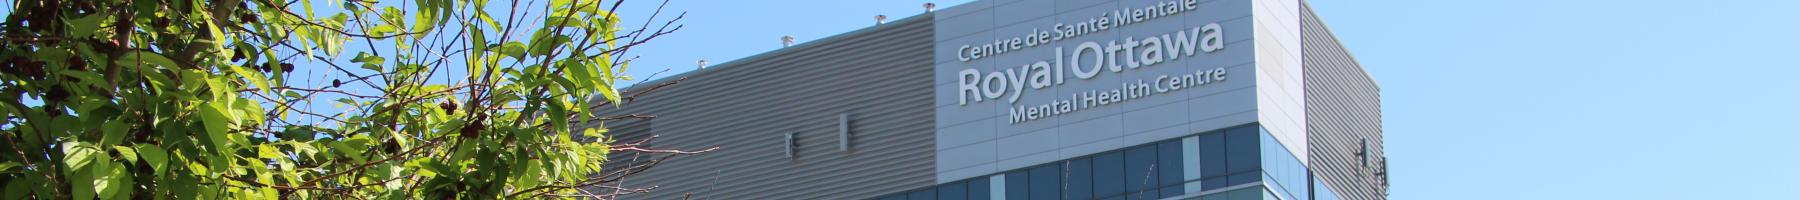 Royal Ottawa Mental Health Centre building